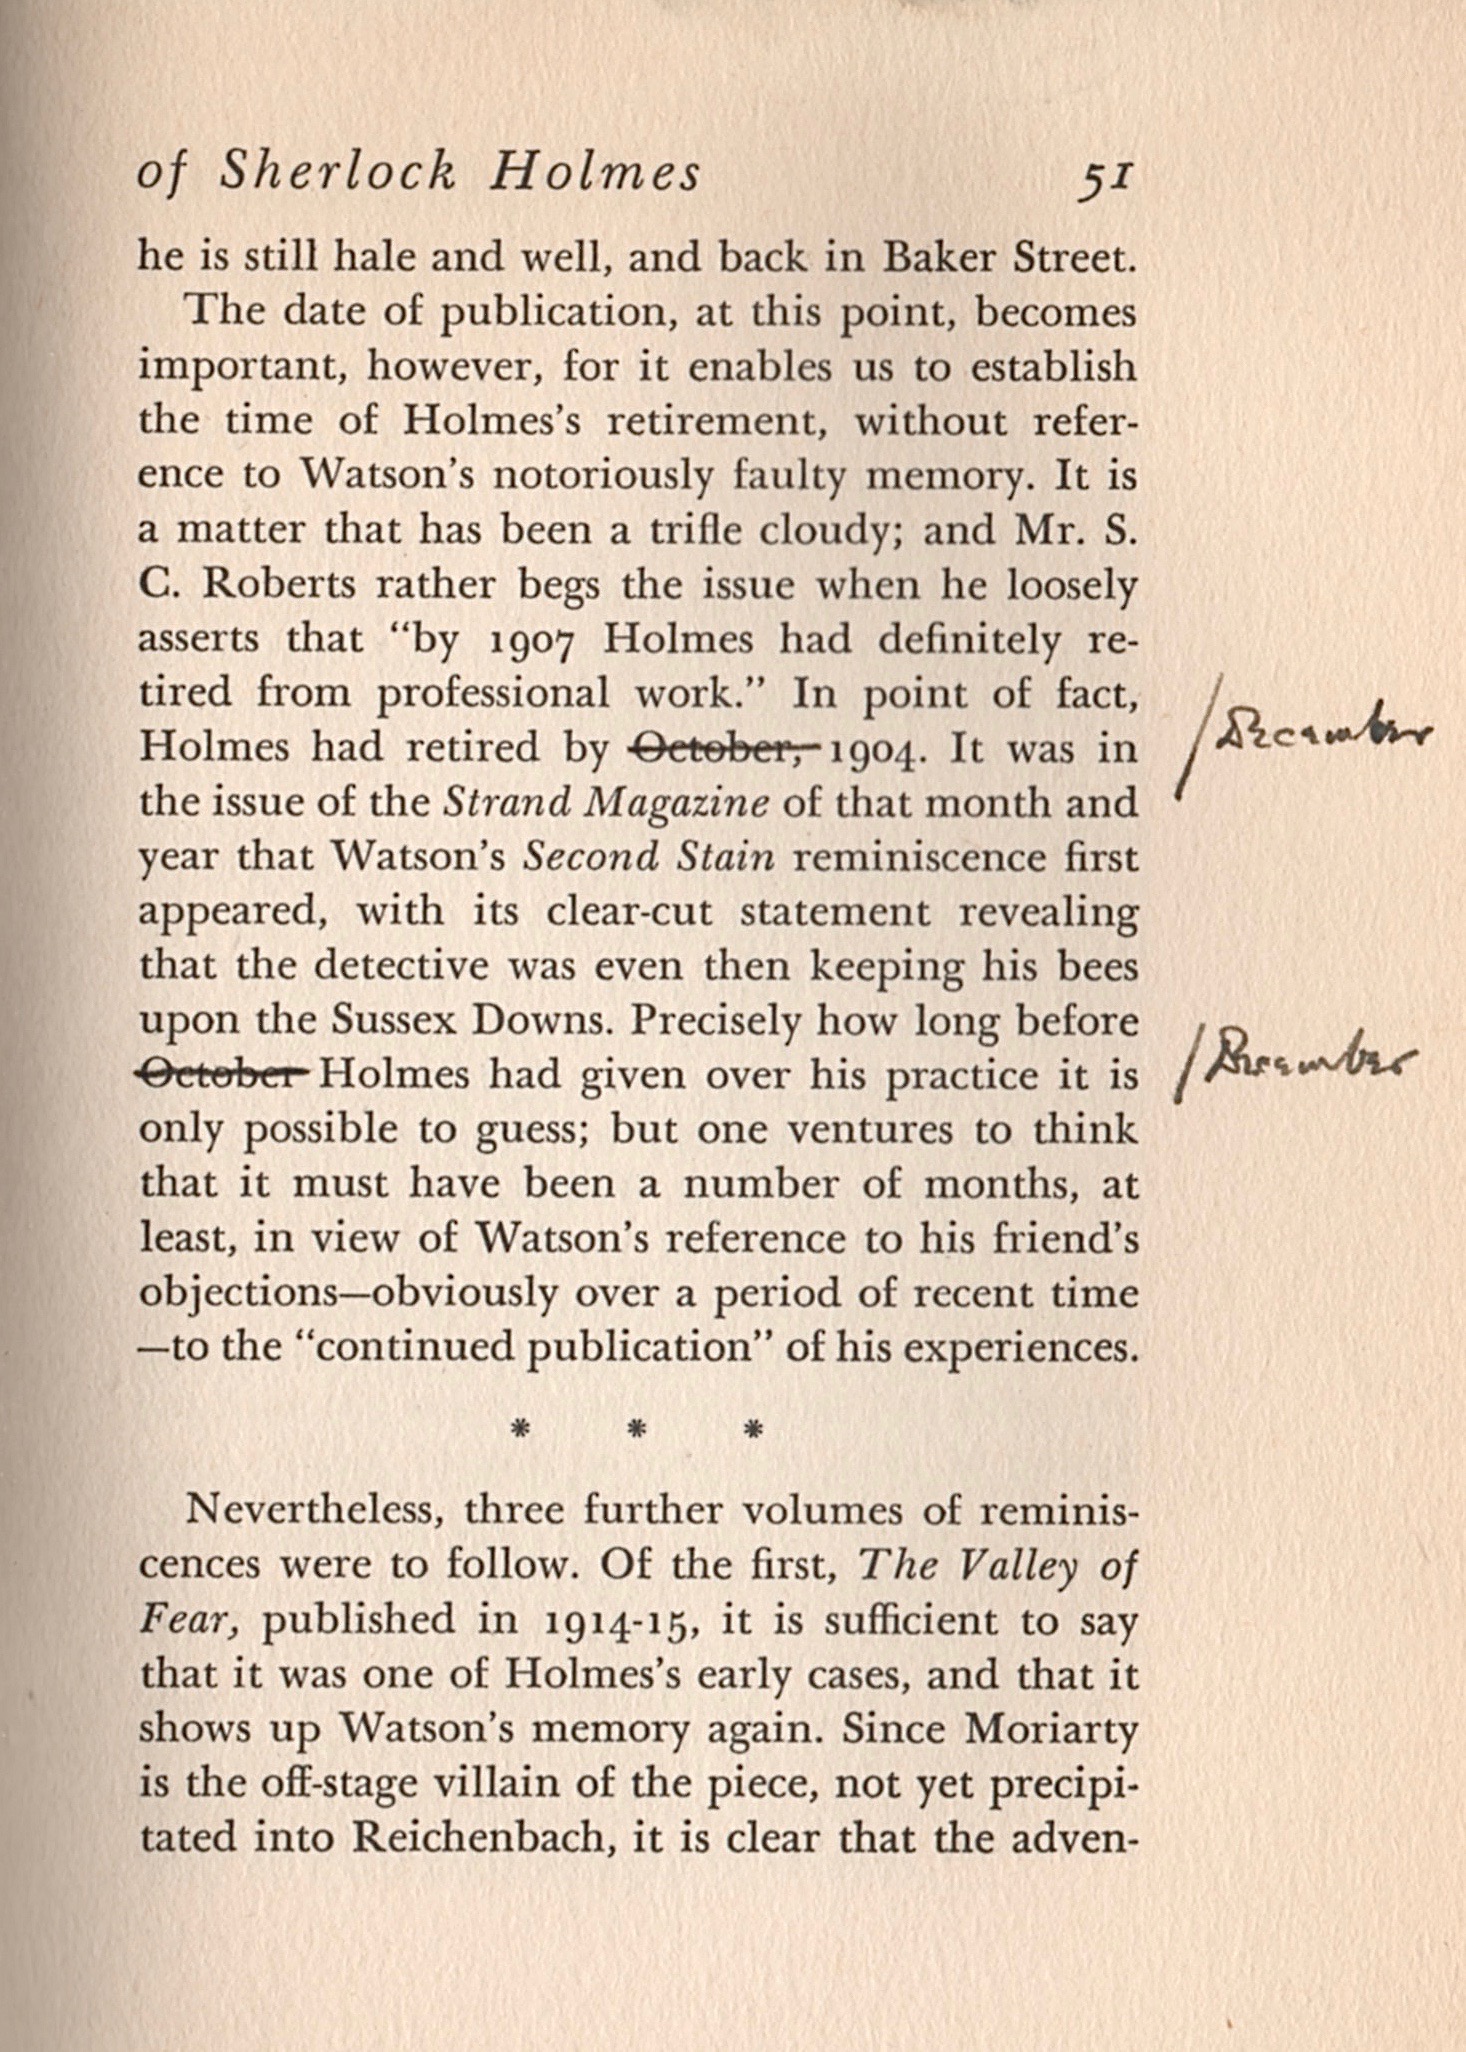 TPLOSH 1933 p. 51 corrections.jpg